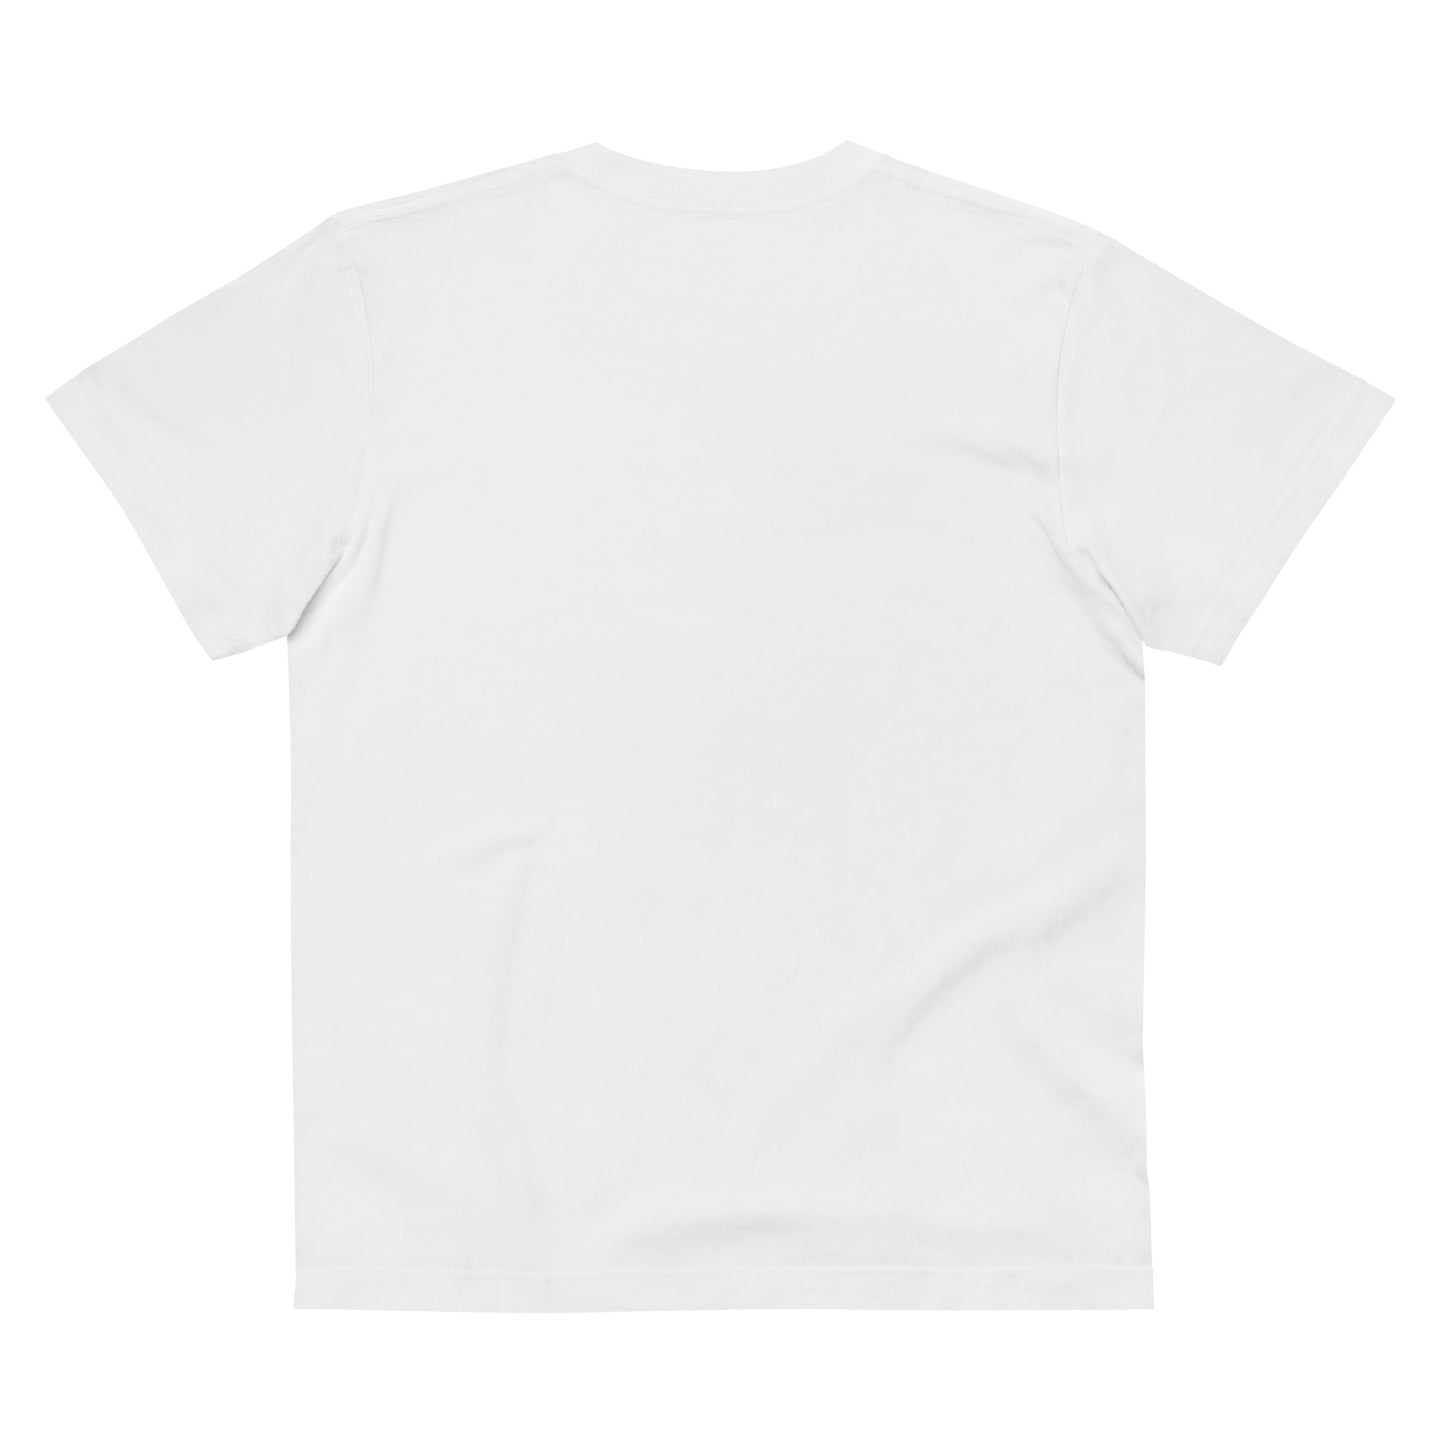 N002 - Katun Berkualitas Tinggi T-shirt (Skuter : Putih)